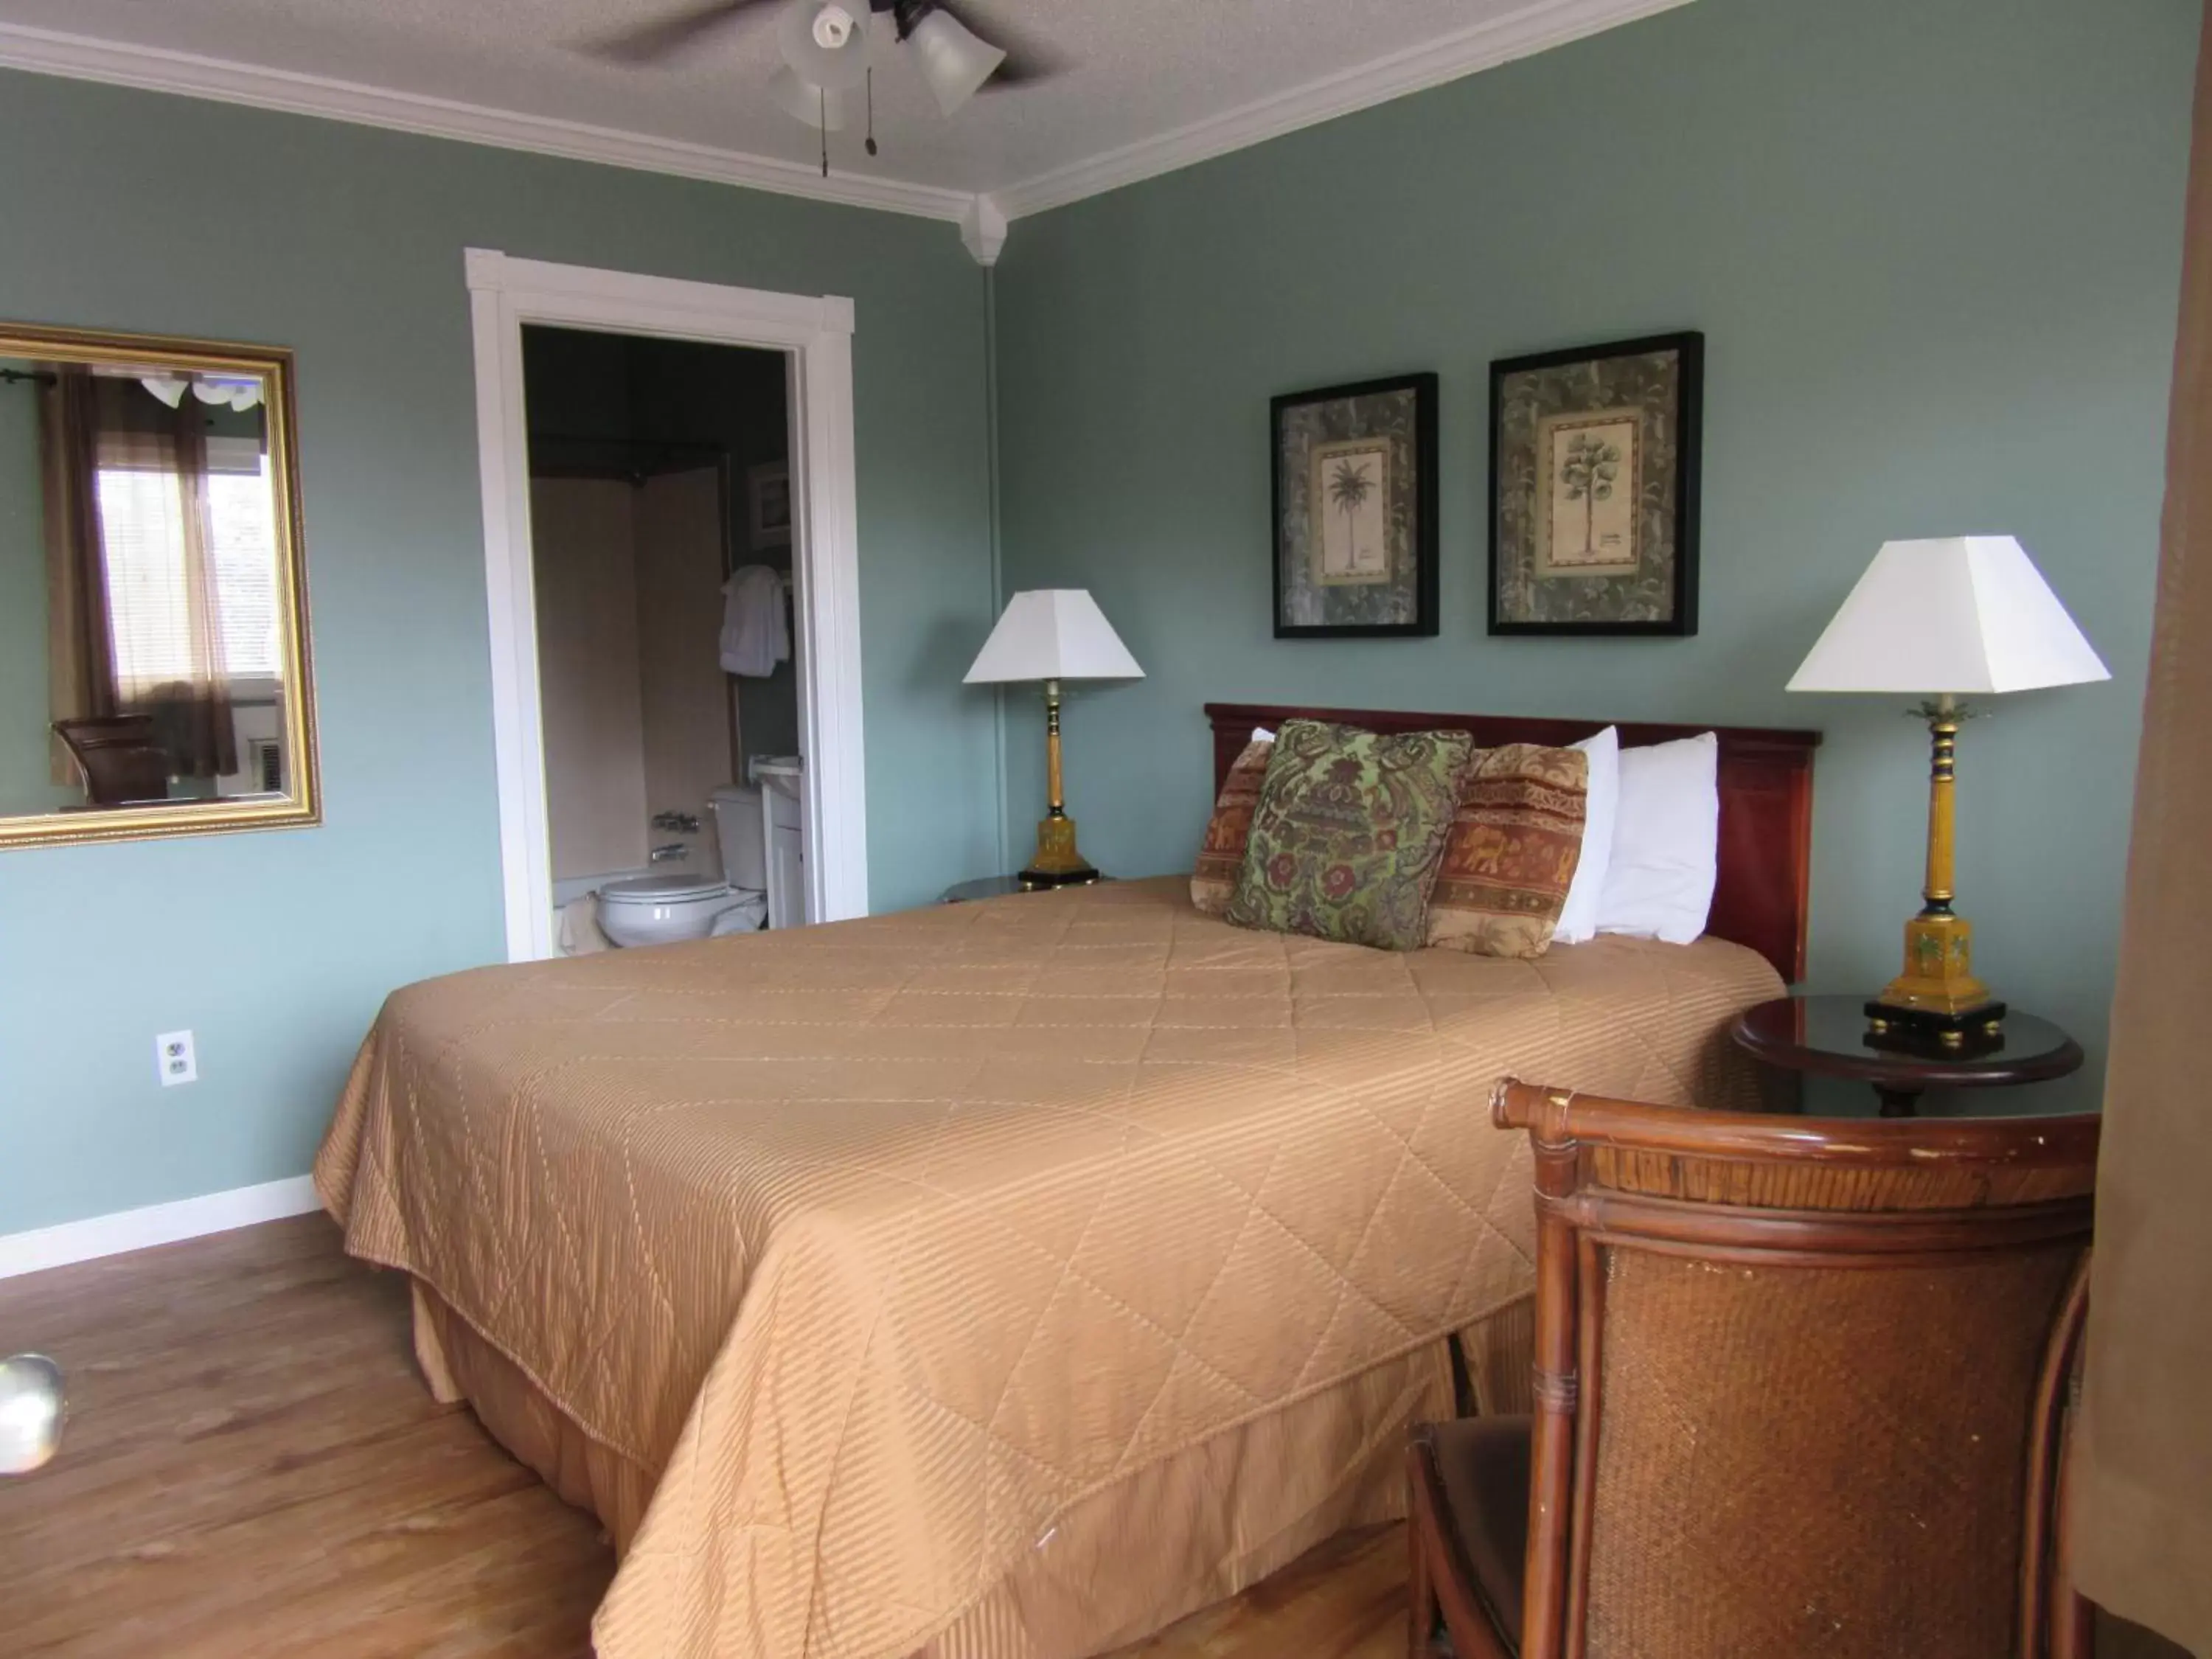 Bed, Room Photo in Atlantis Inn - Tybee Island